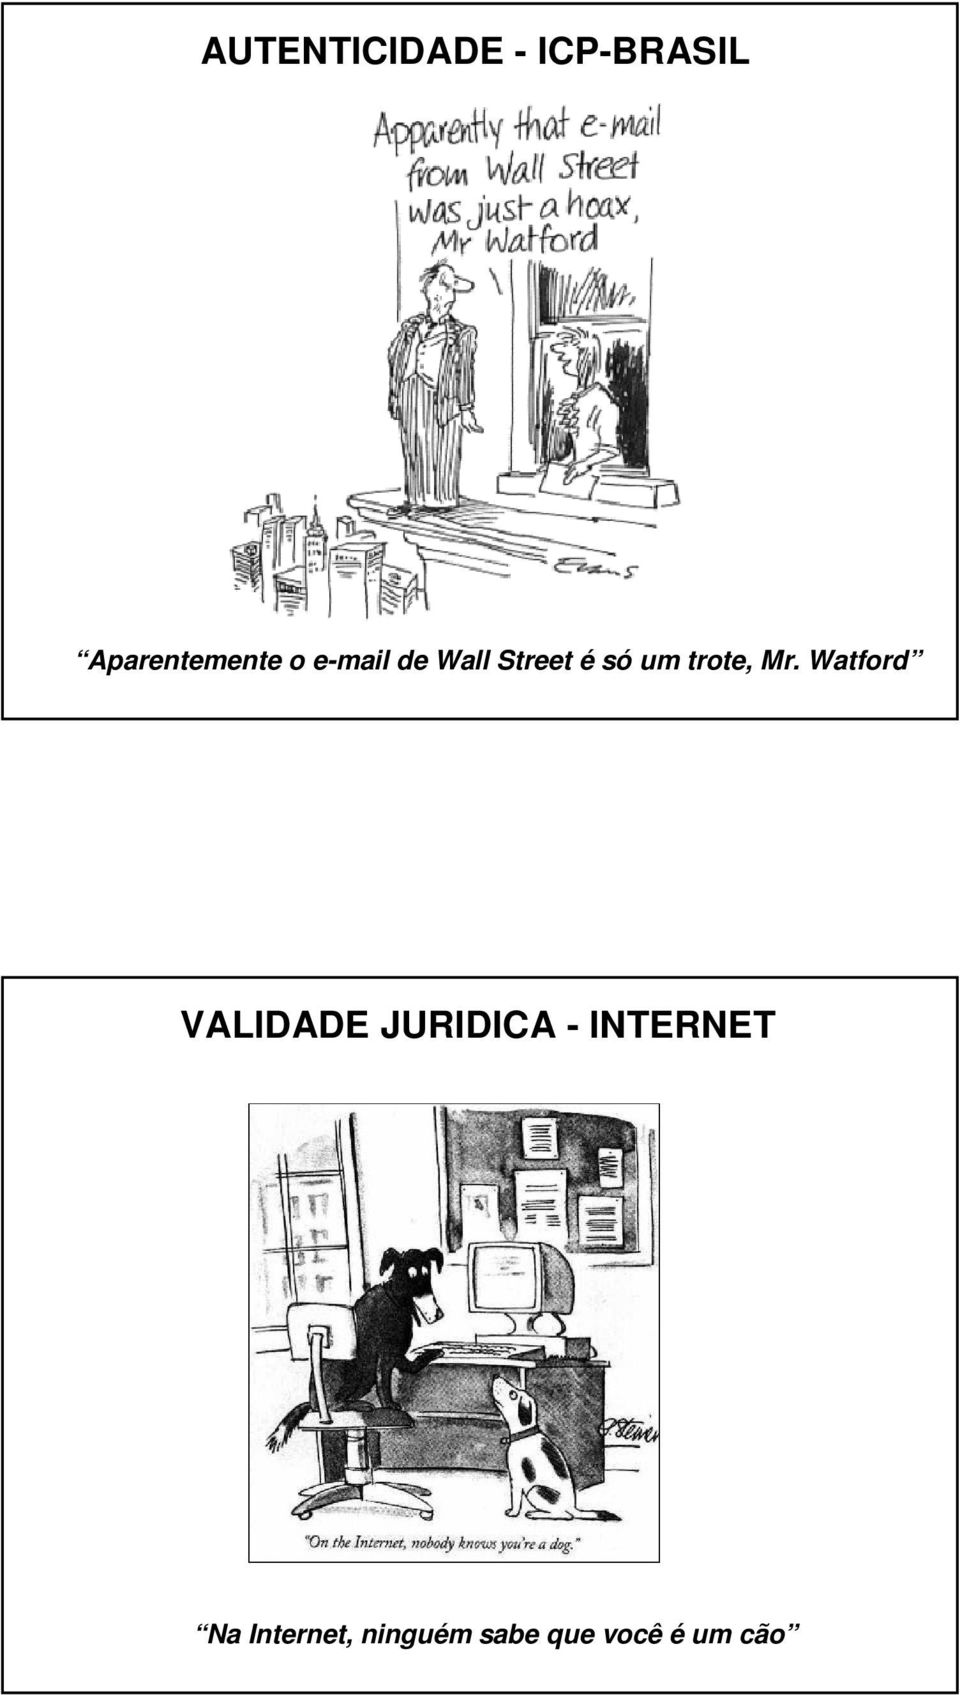 Mr. Watford VALIDADE JURIDICA - INTERNET